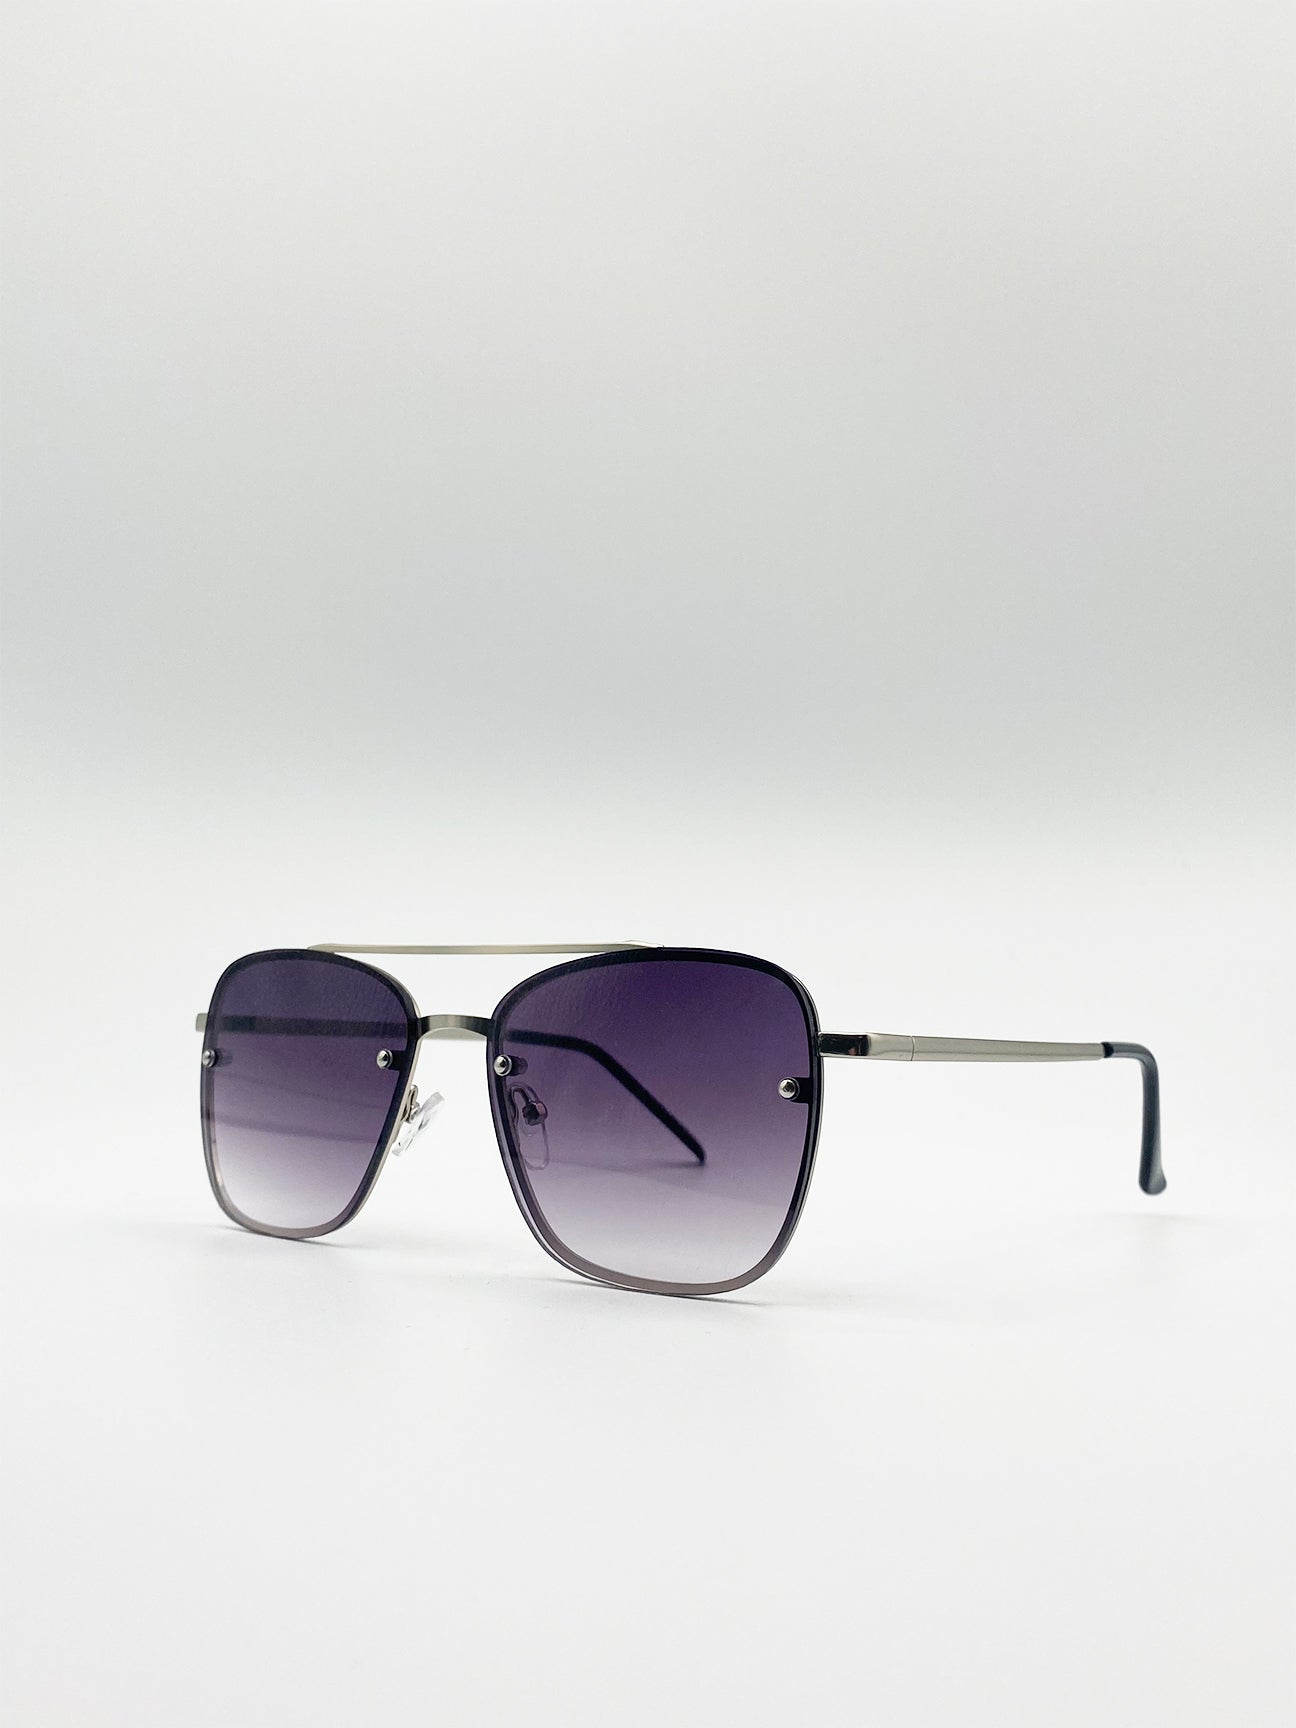 Silver and Black Frame Aviator Sunglasses with Smoke Lenses